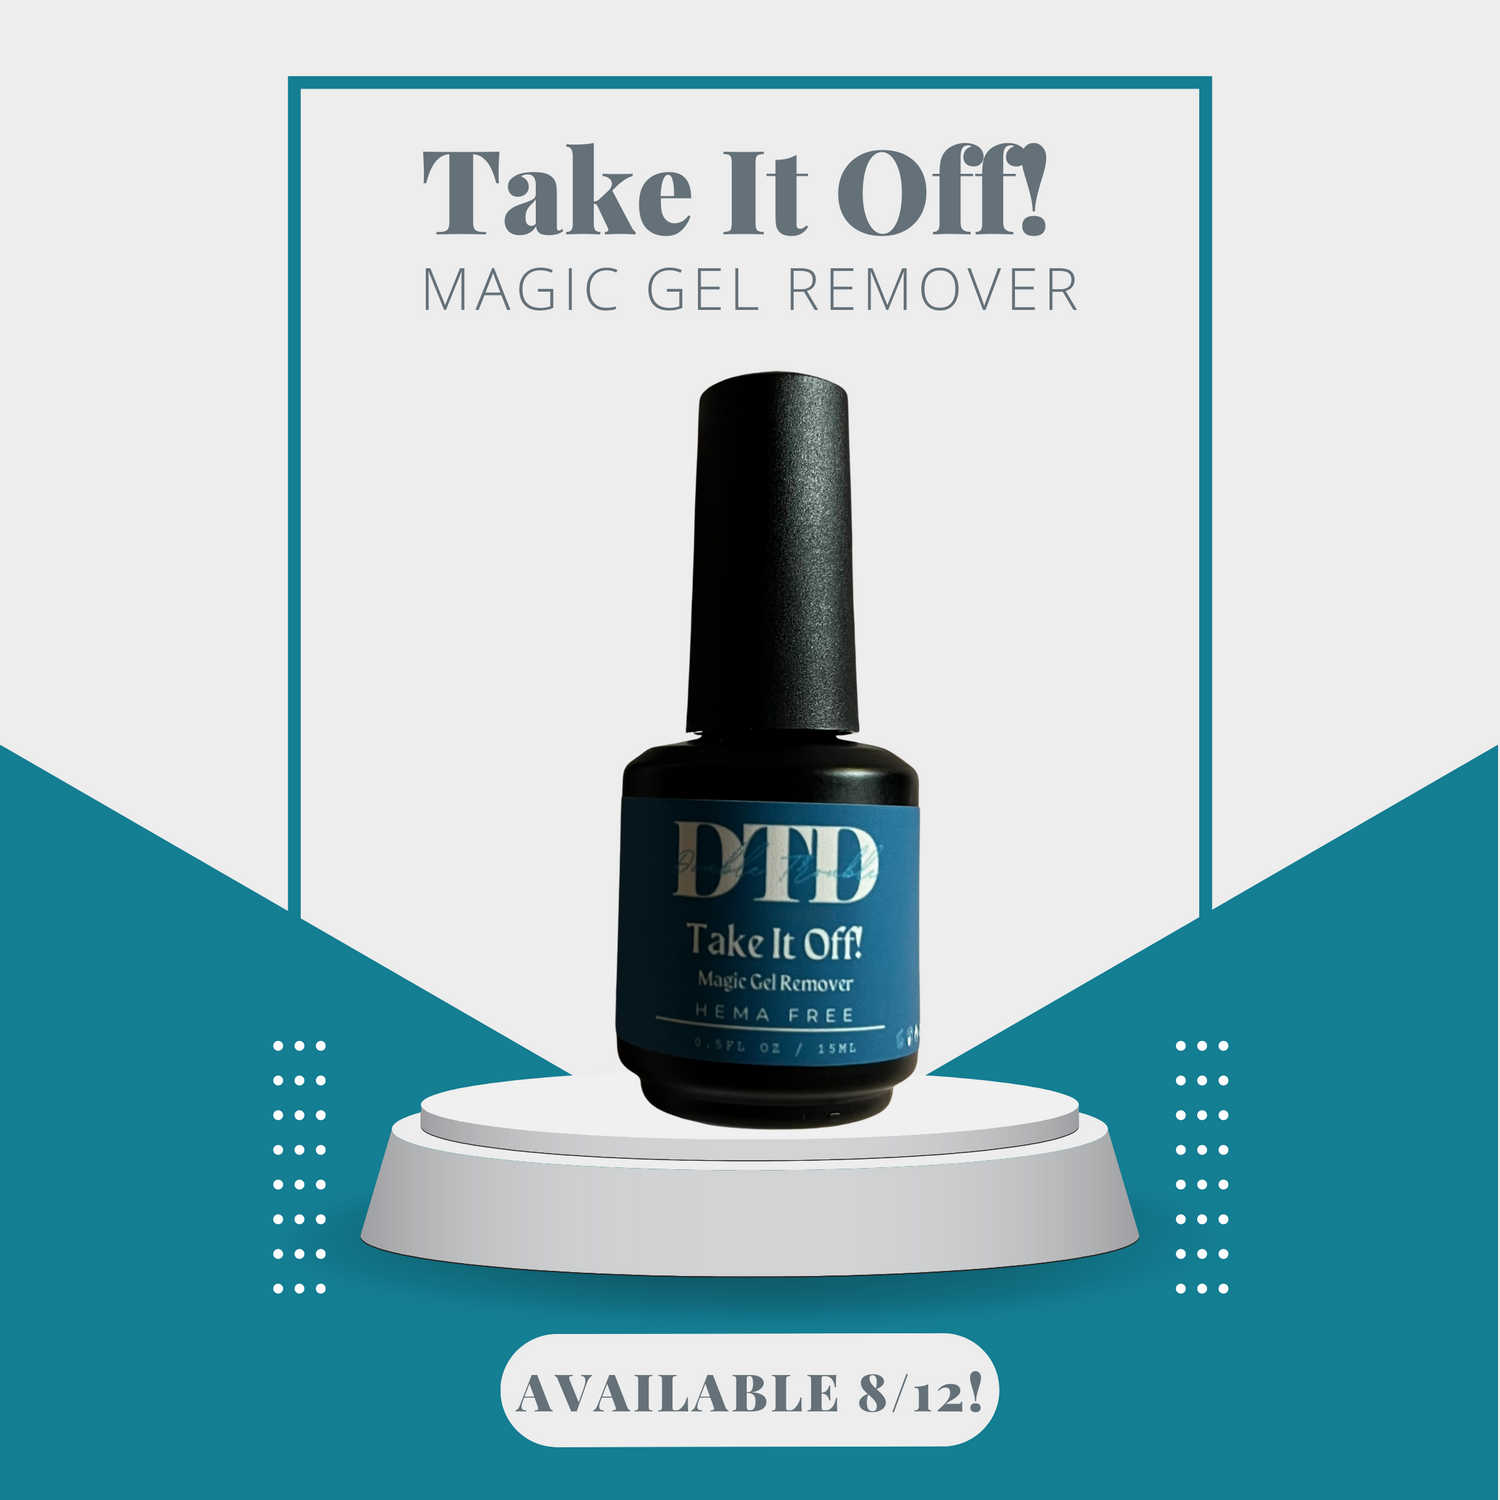 Take It Off! Magic Gel Remover